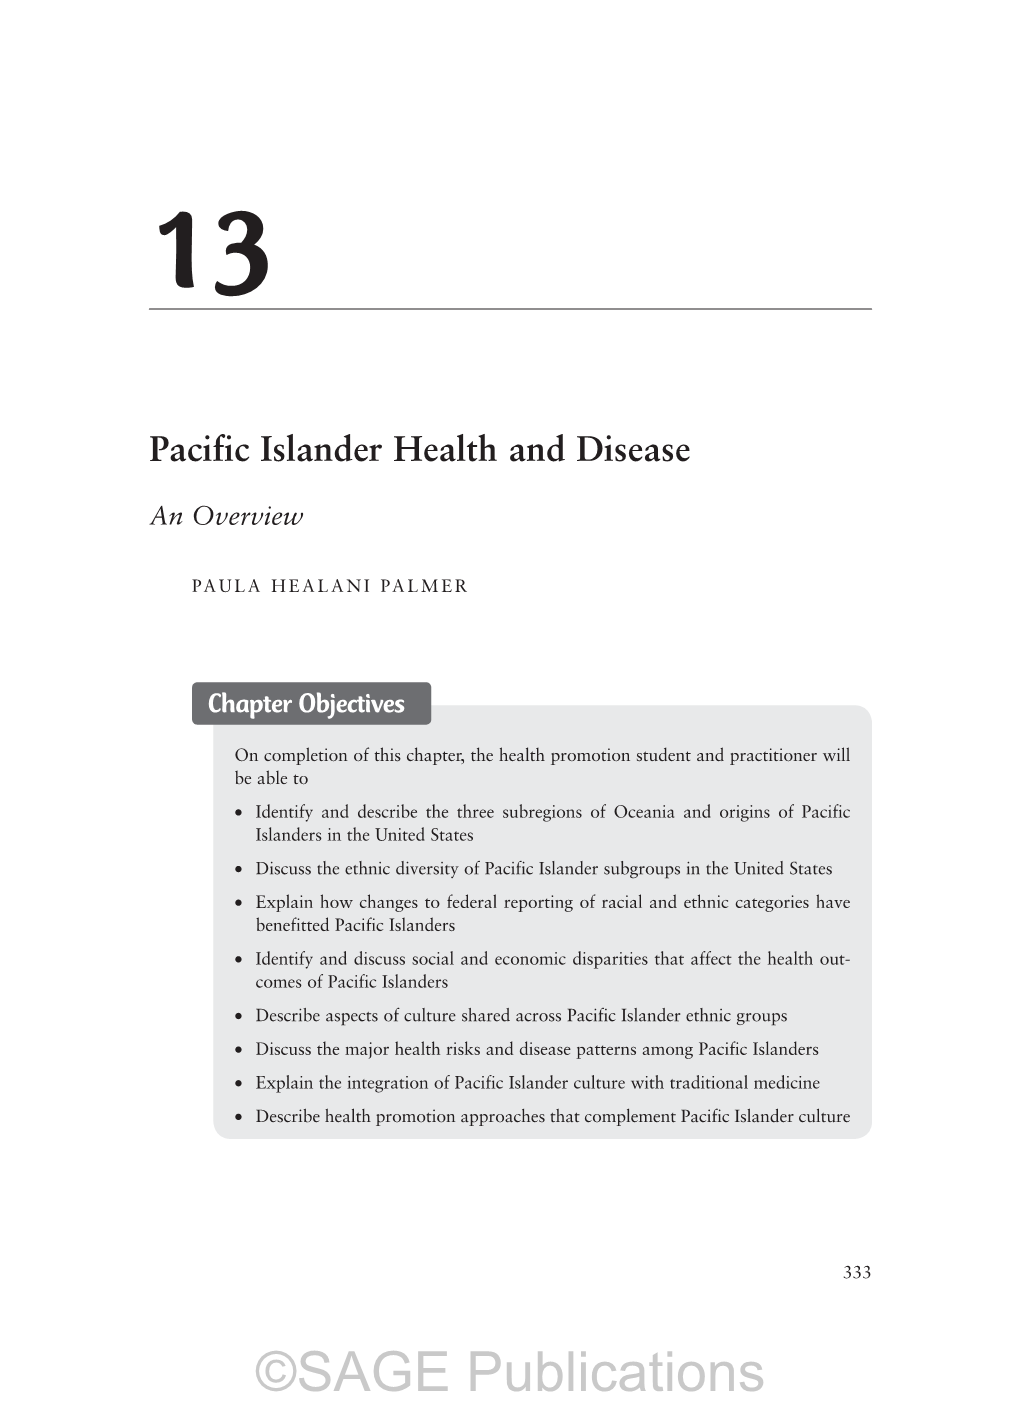 Pacific Islander Health and Disease